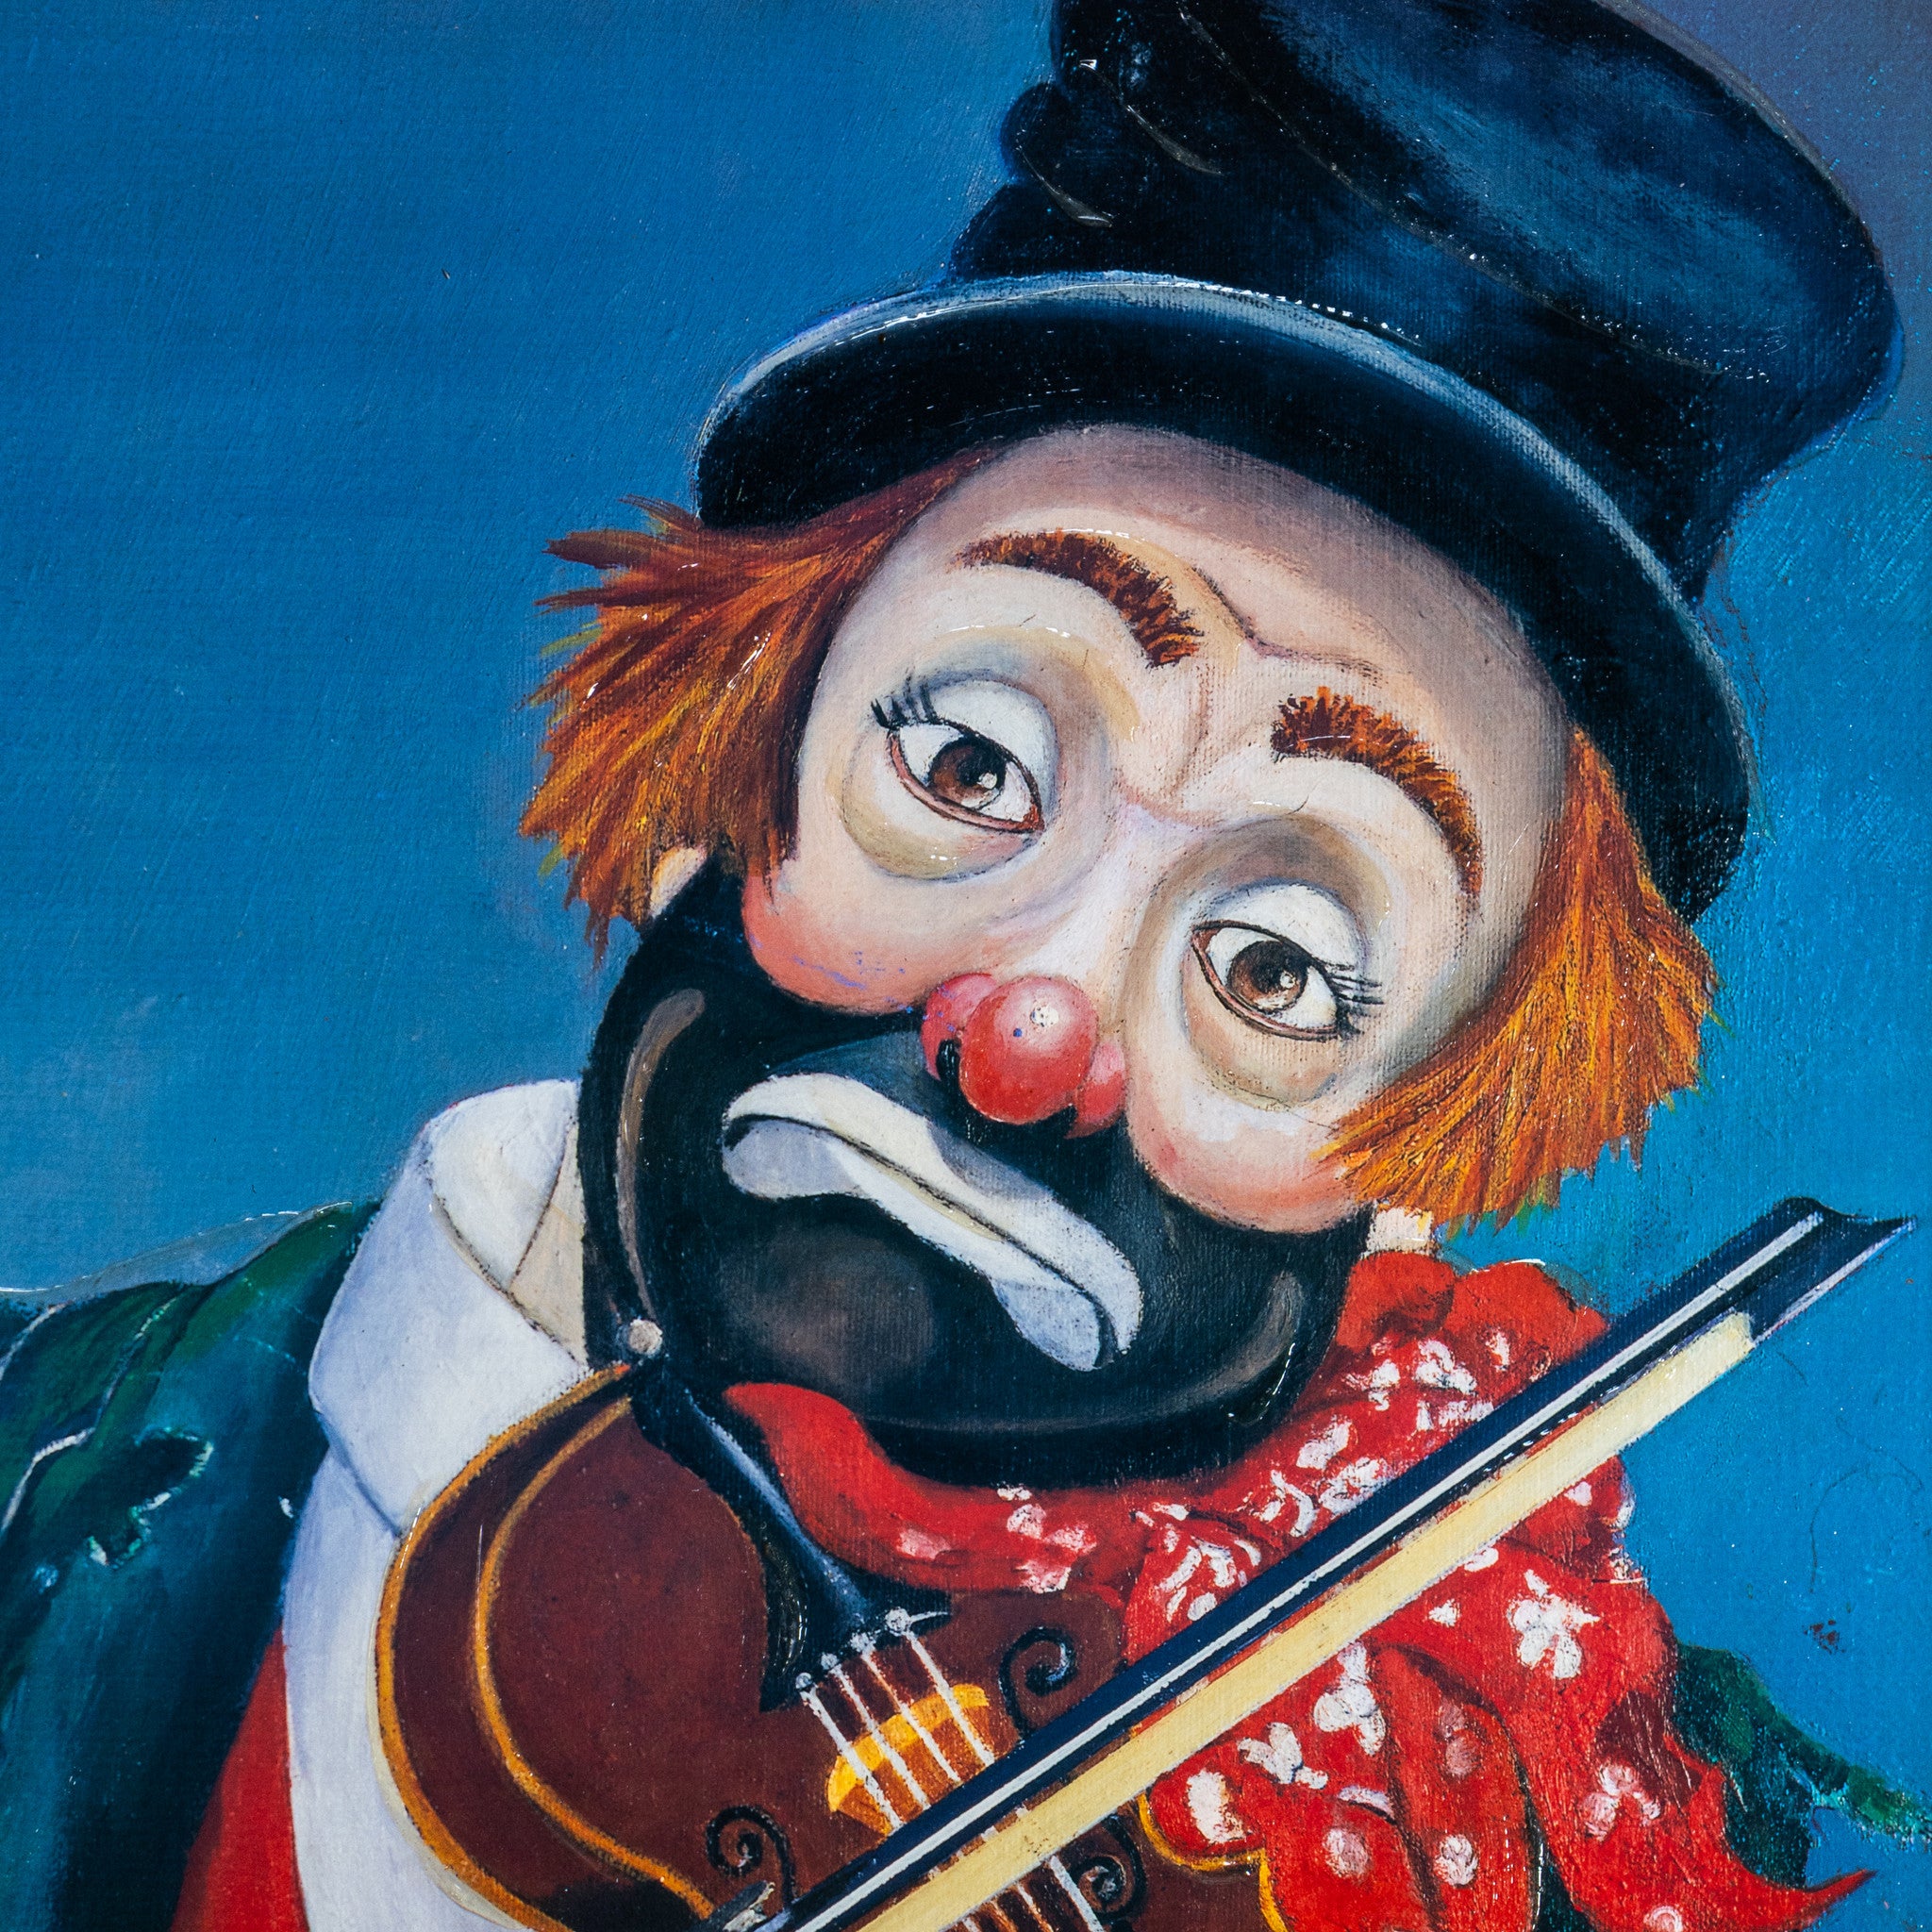 Clown's Clown by Red Skelton